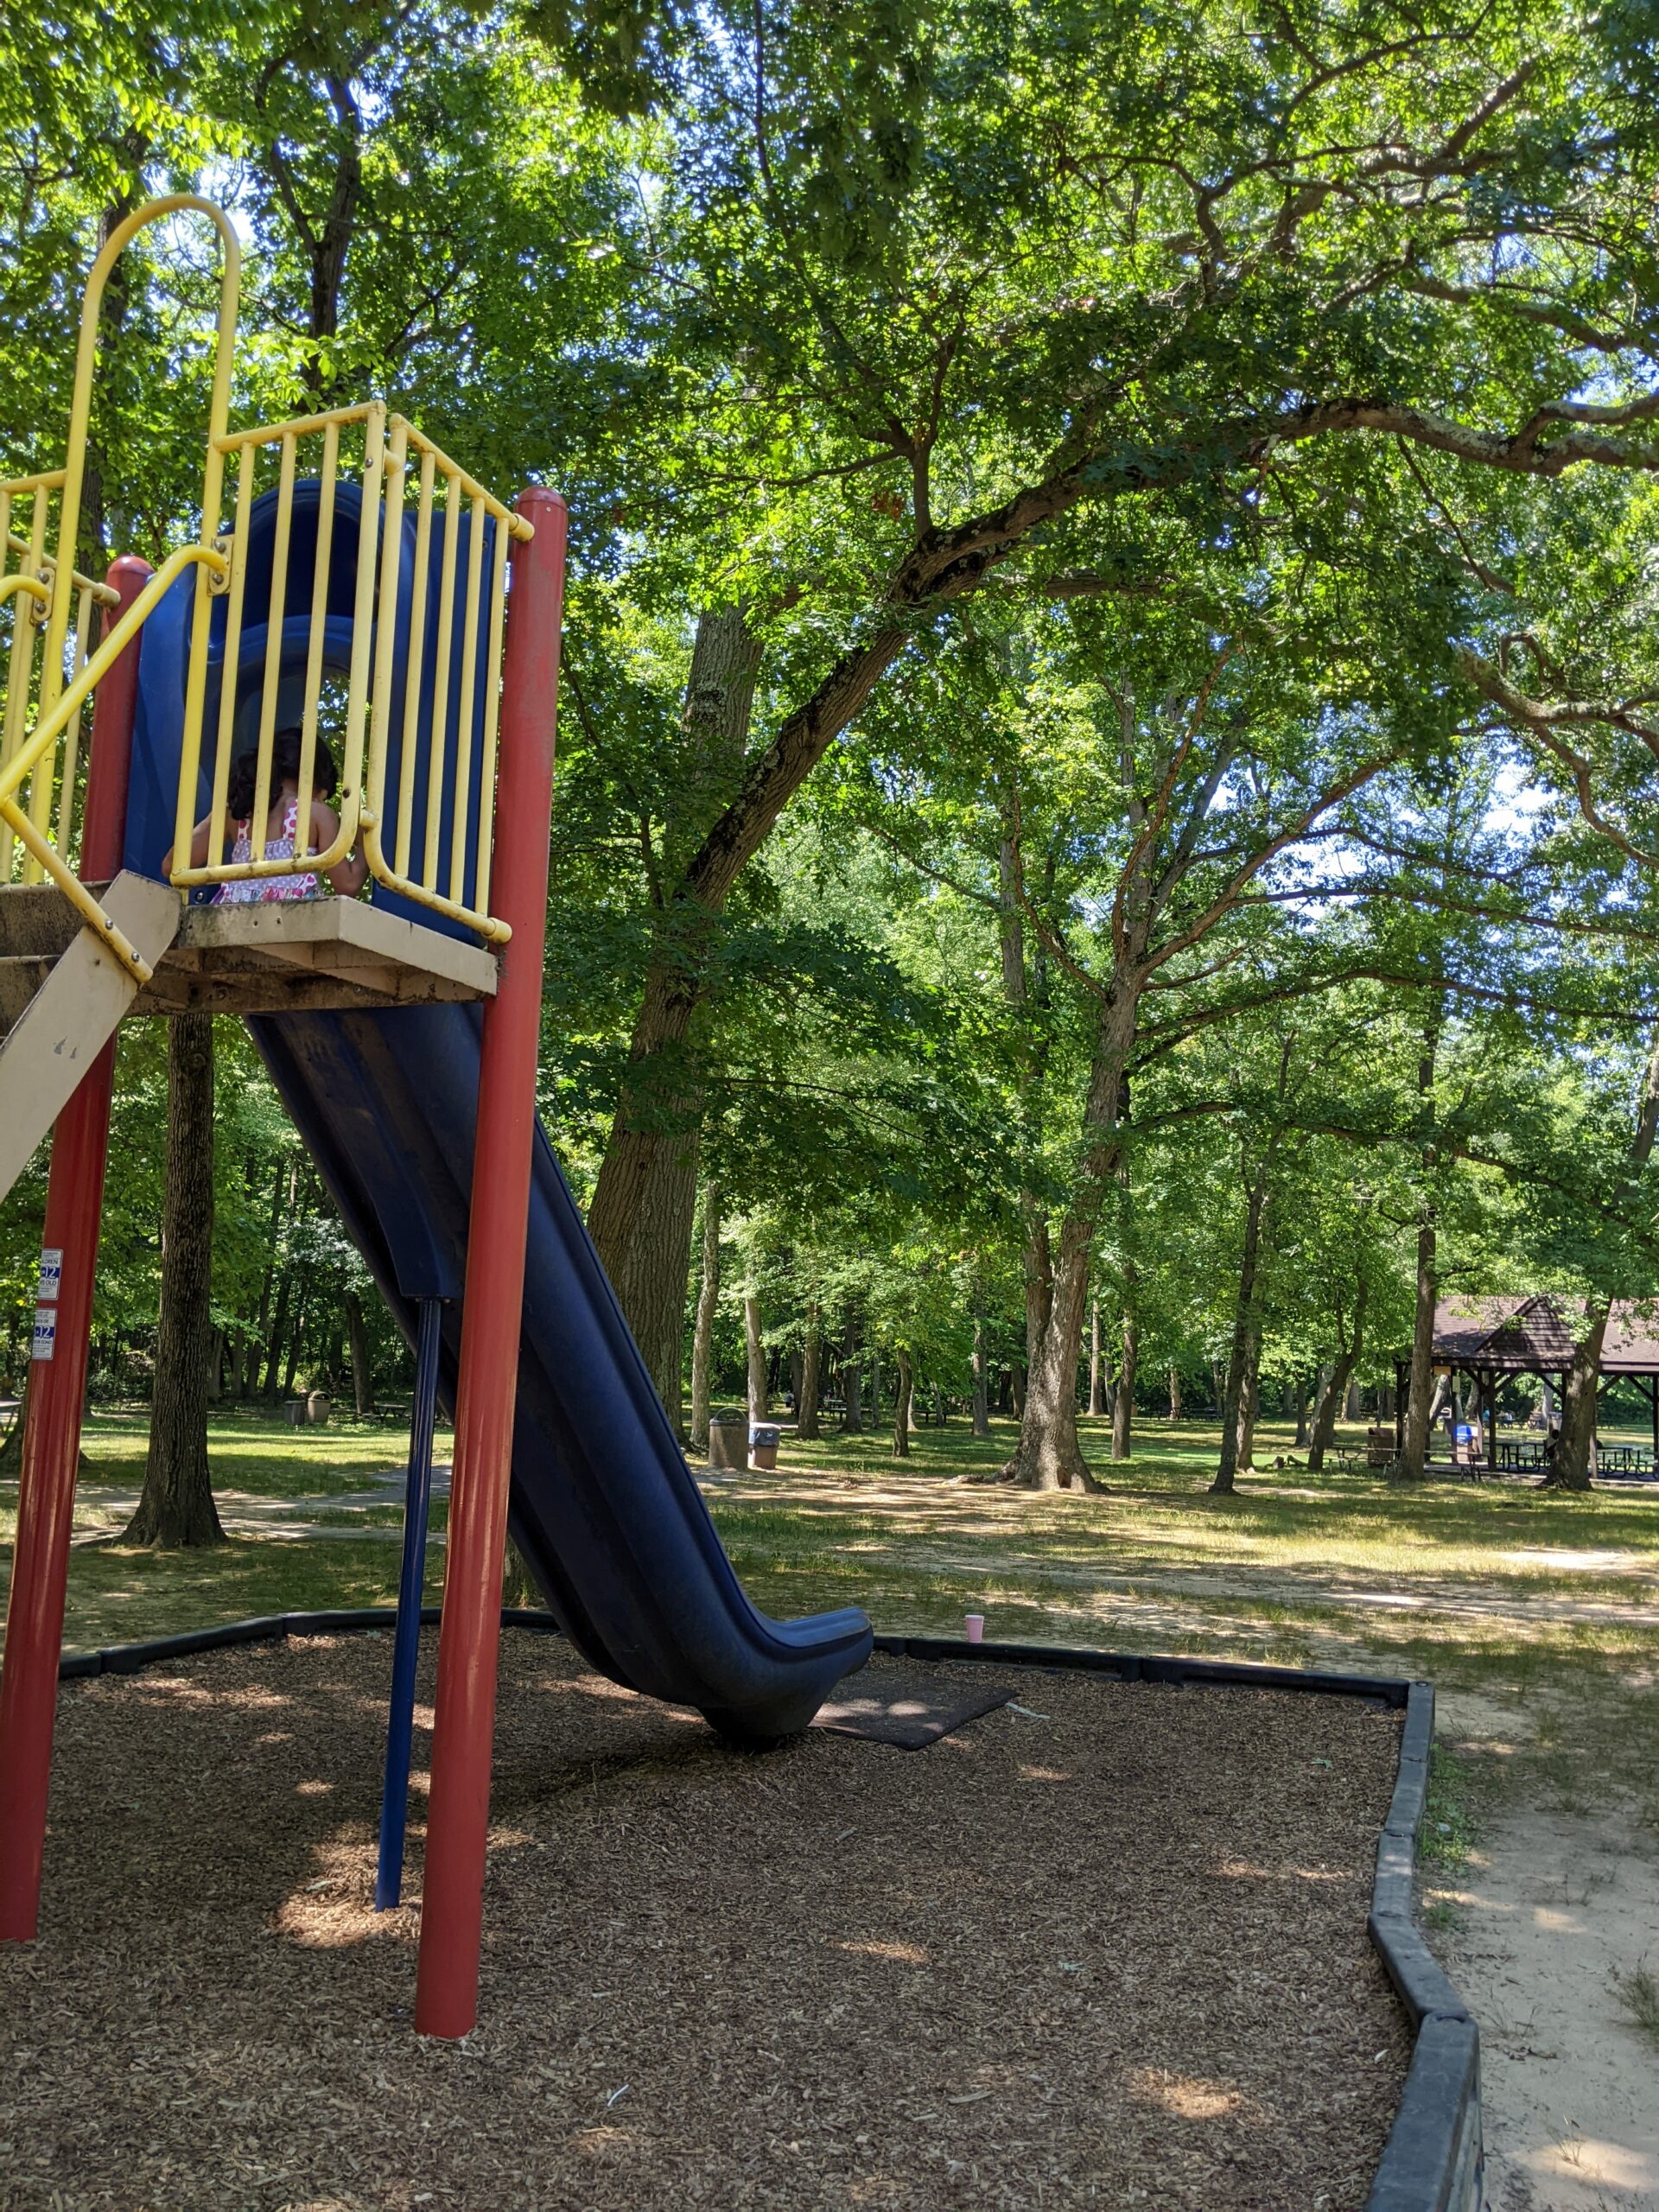 Children's Park Playground at Veteran's Park in Hamilton Township NJ - SLIDES - straight blue slide